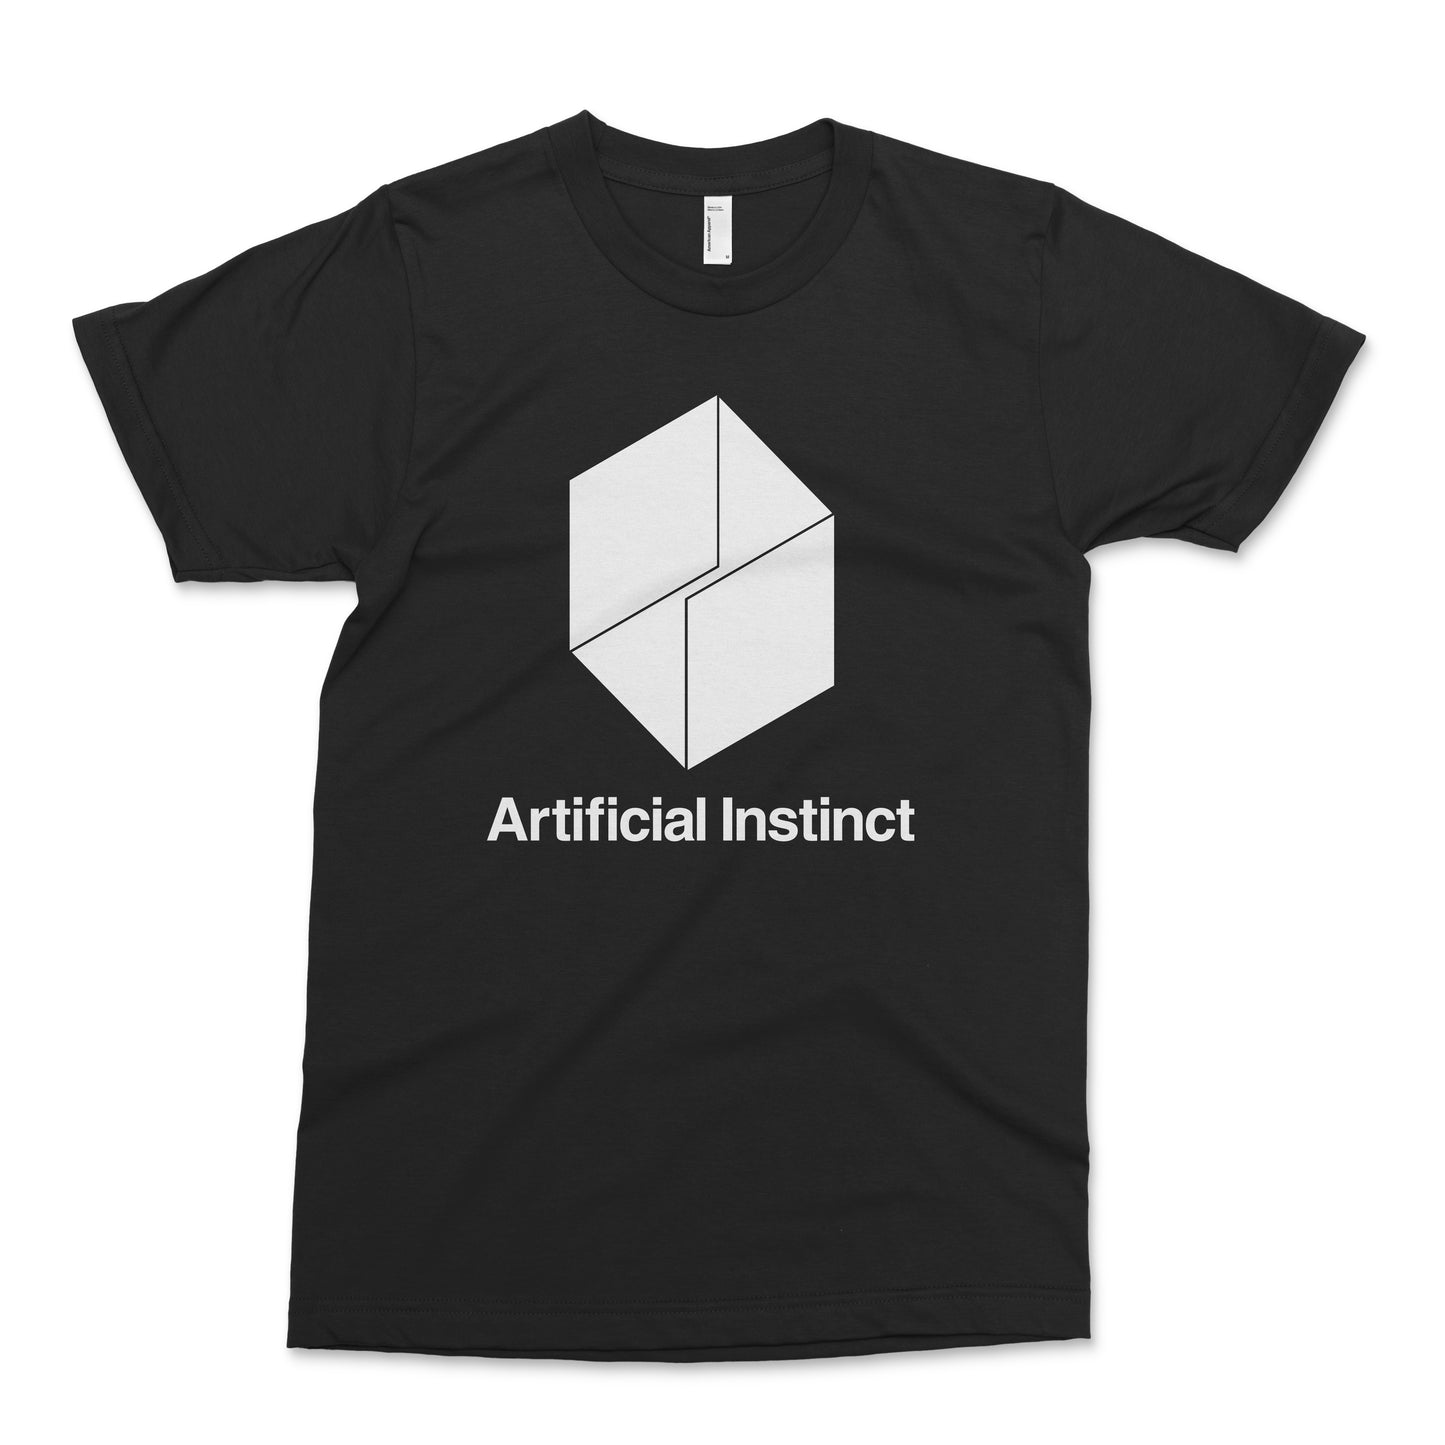 Artificial Instinct - Graphic T Shirt